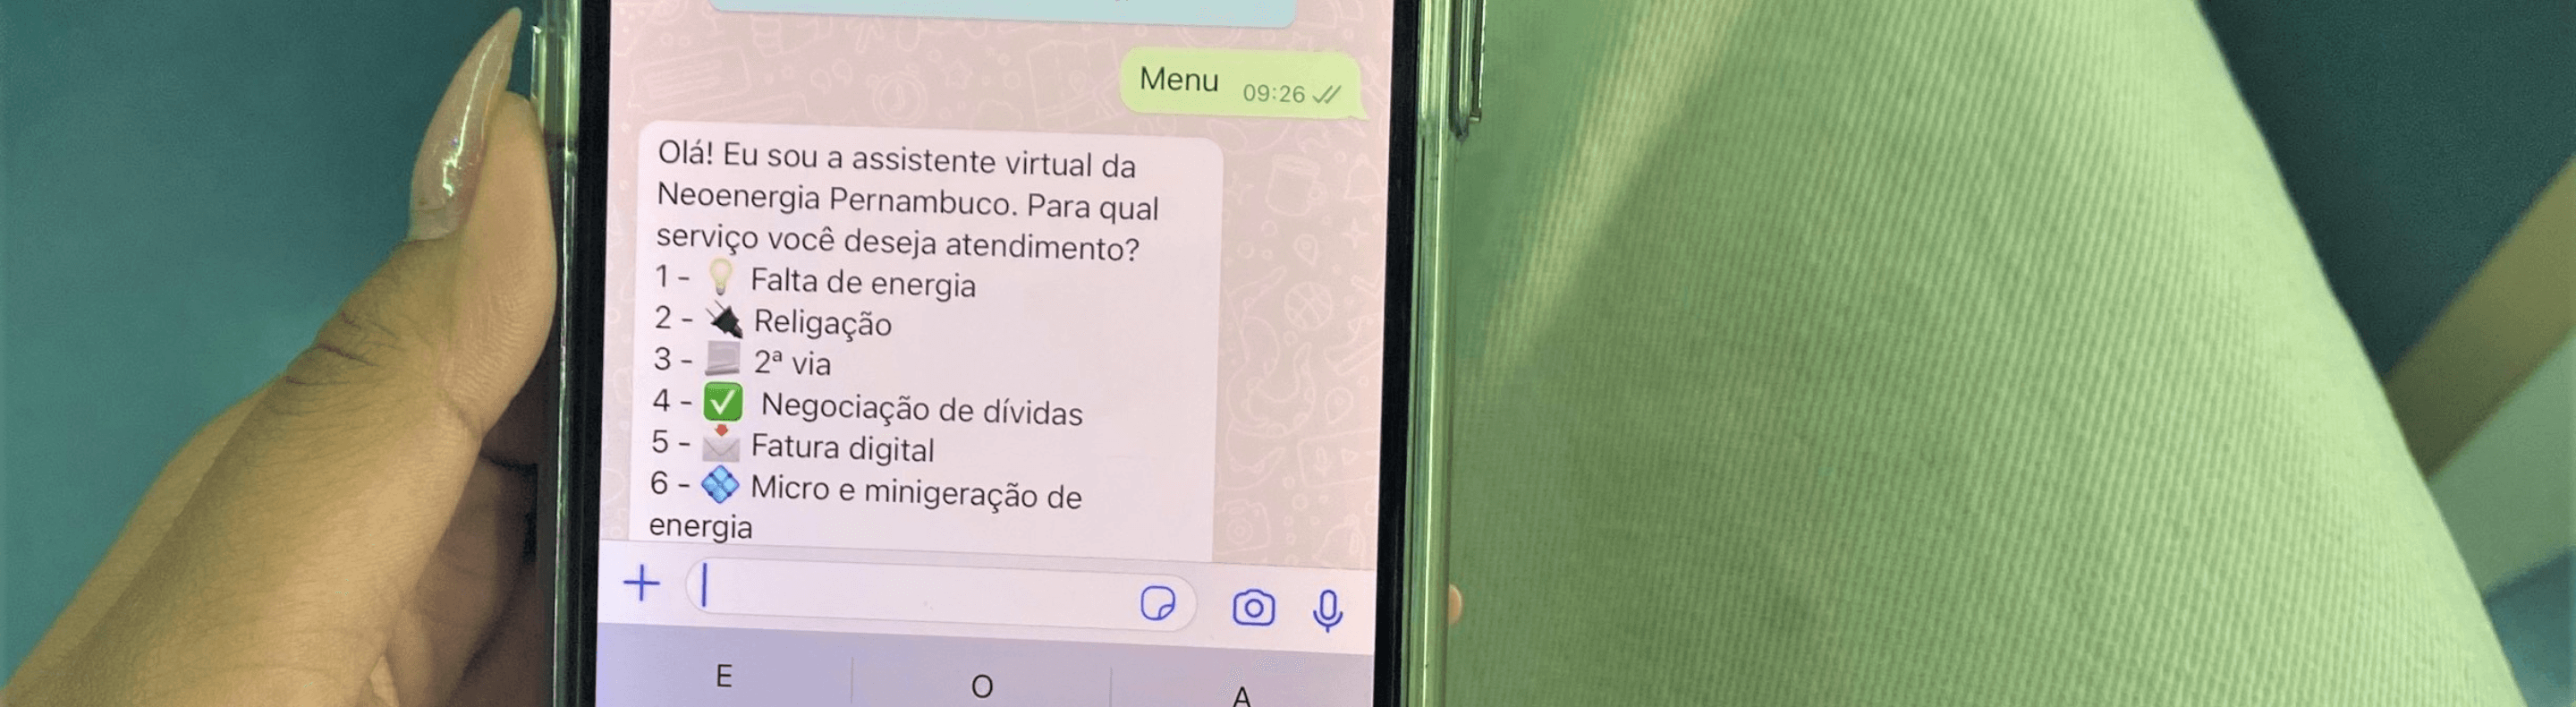 Telefone aberto na conversa de WhatsApp da Neoenergia Pernambuco